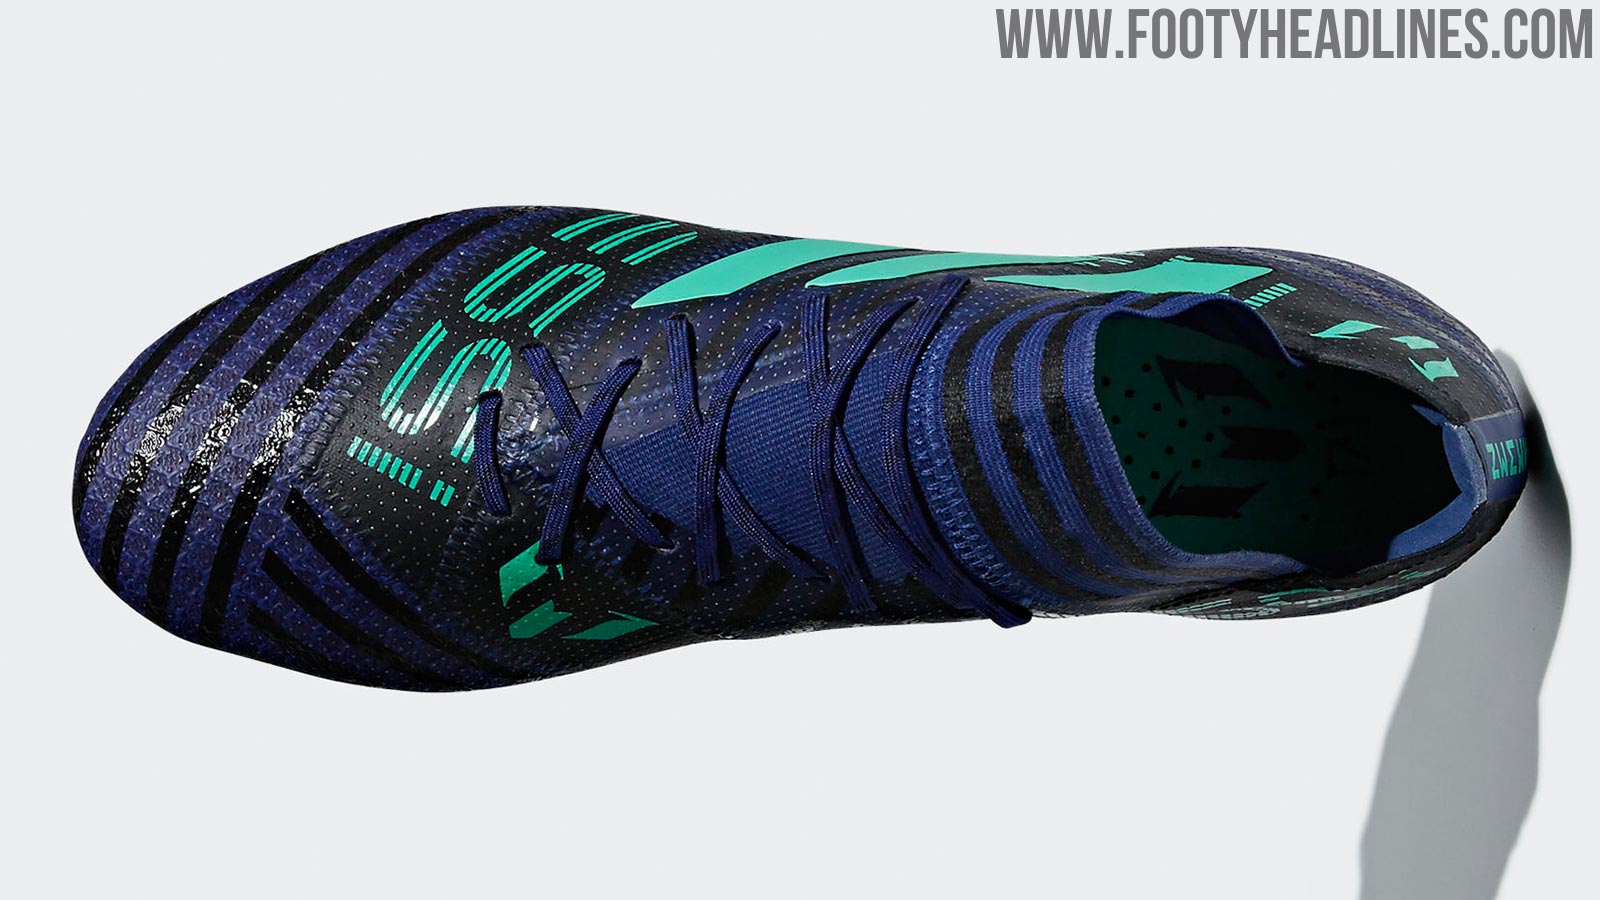 'Deadly Strike' Adidas Nemeziz Messi 17 Boots Released - Footy Headlines